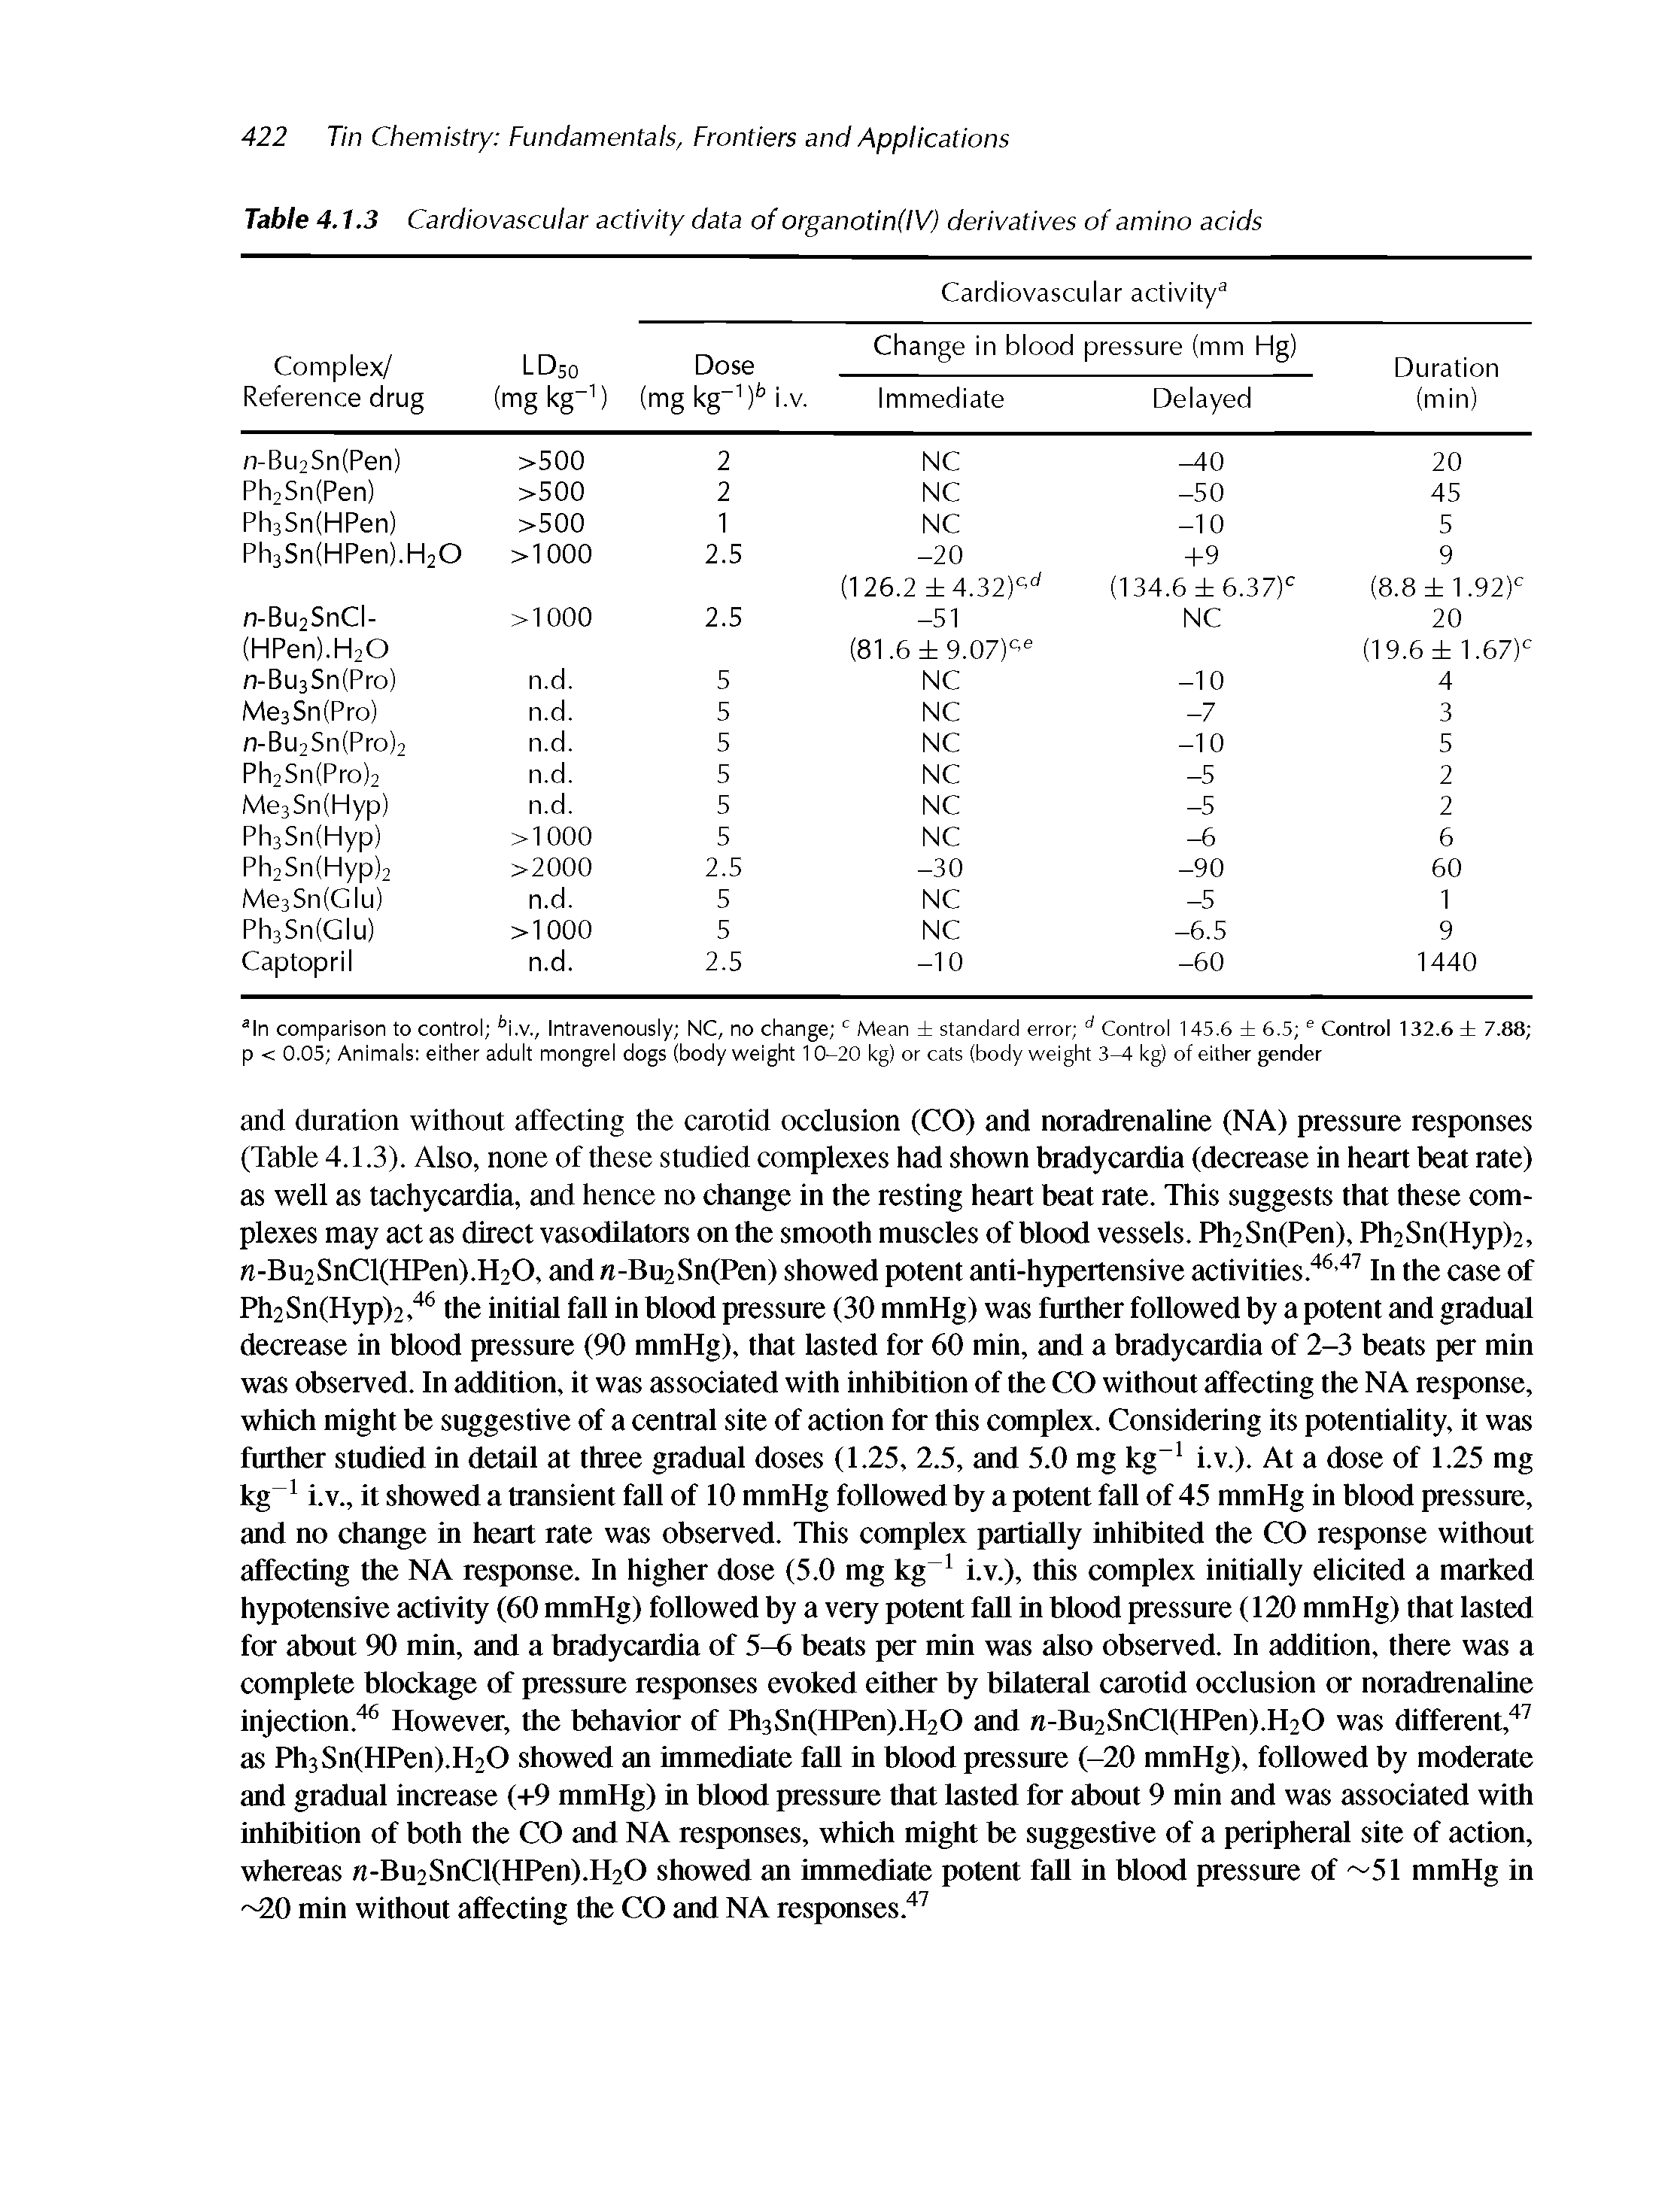 Table 4.1.3 Cardiovascular activity data oforganotln(IV) derivatives of amino acids...